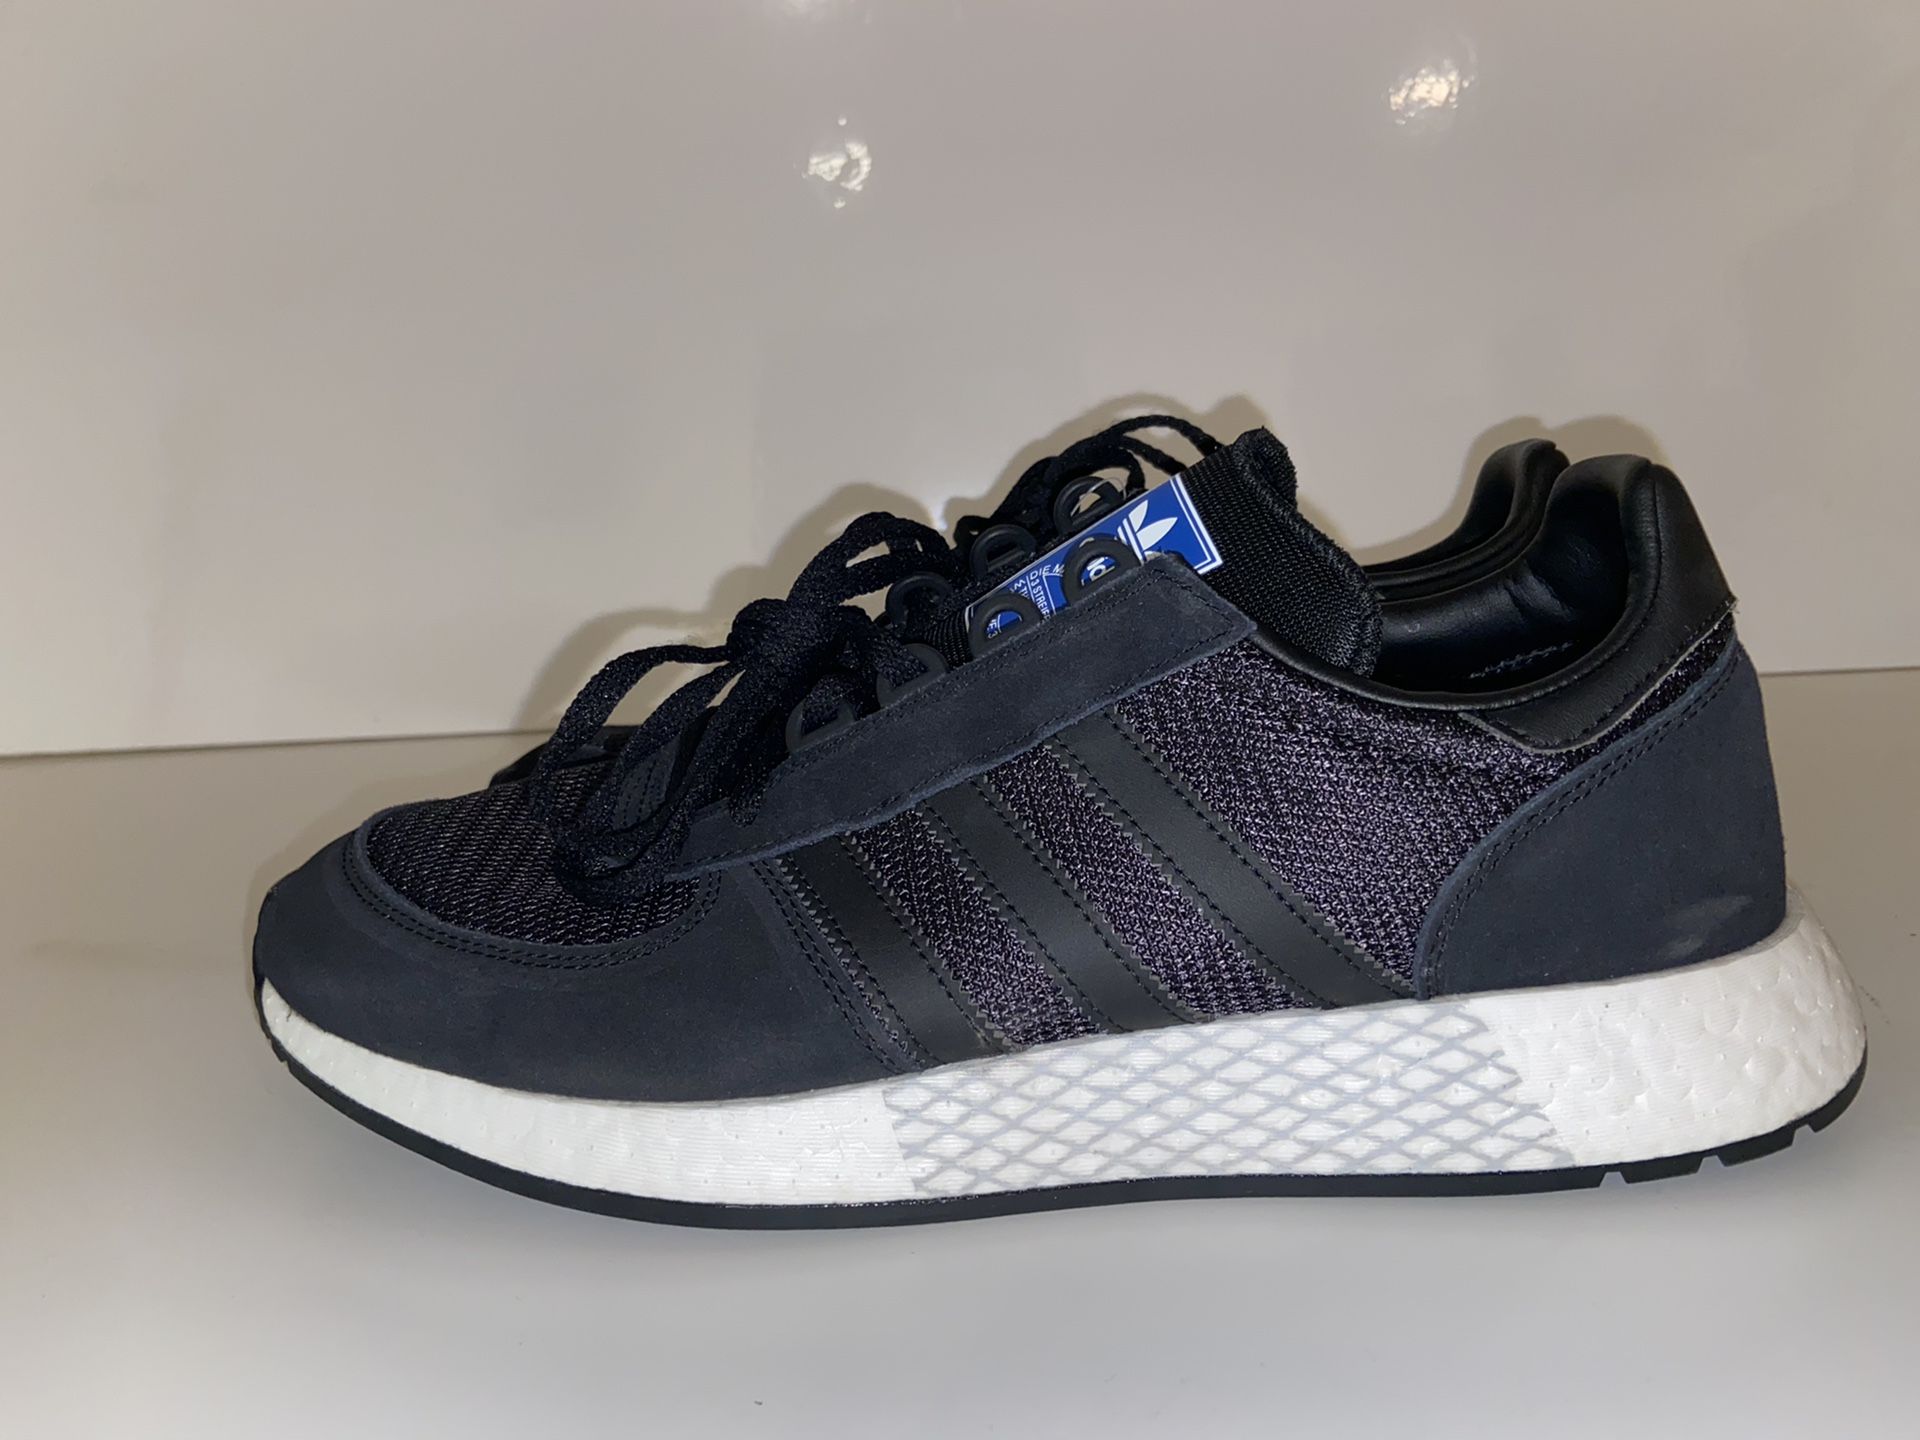 Adidas Originals Men's Marathon Tech Boost Black/ White G27463 Mens Size 11